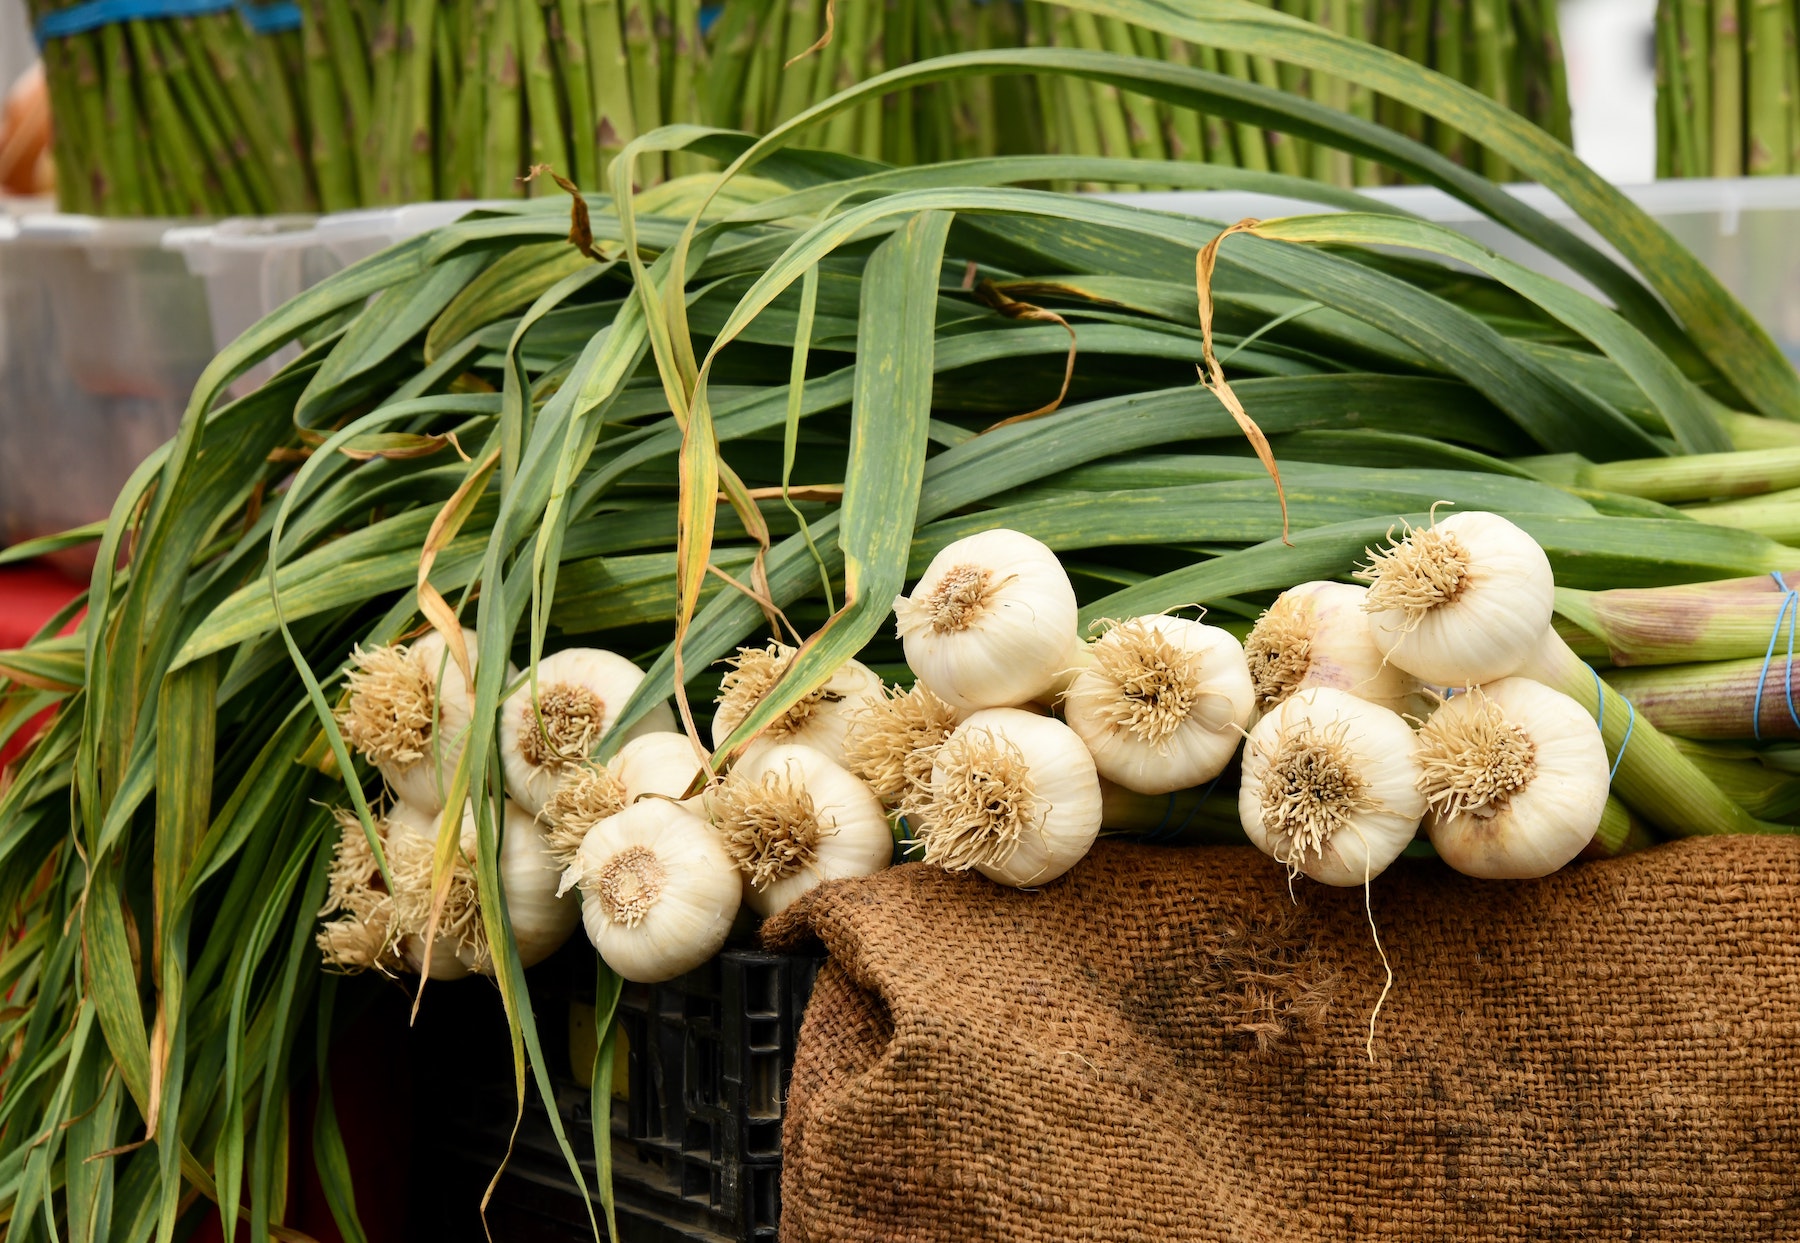 Plant Garlic in September